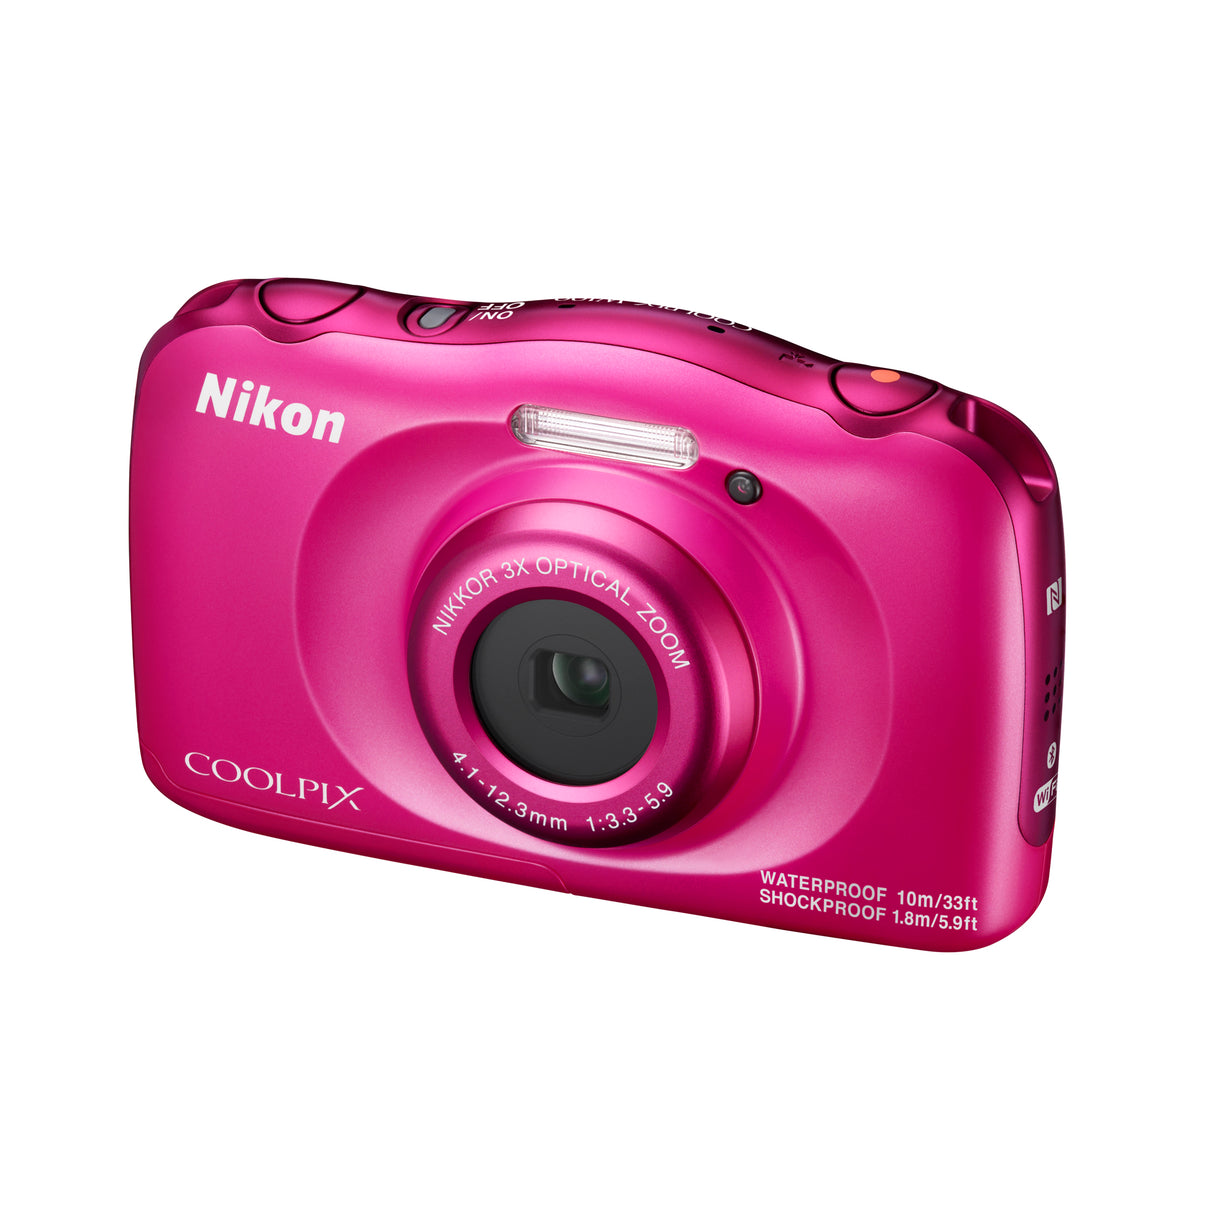 Nikon COOLPIX W100 Point & Shoot Camera